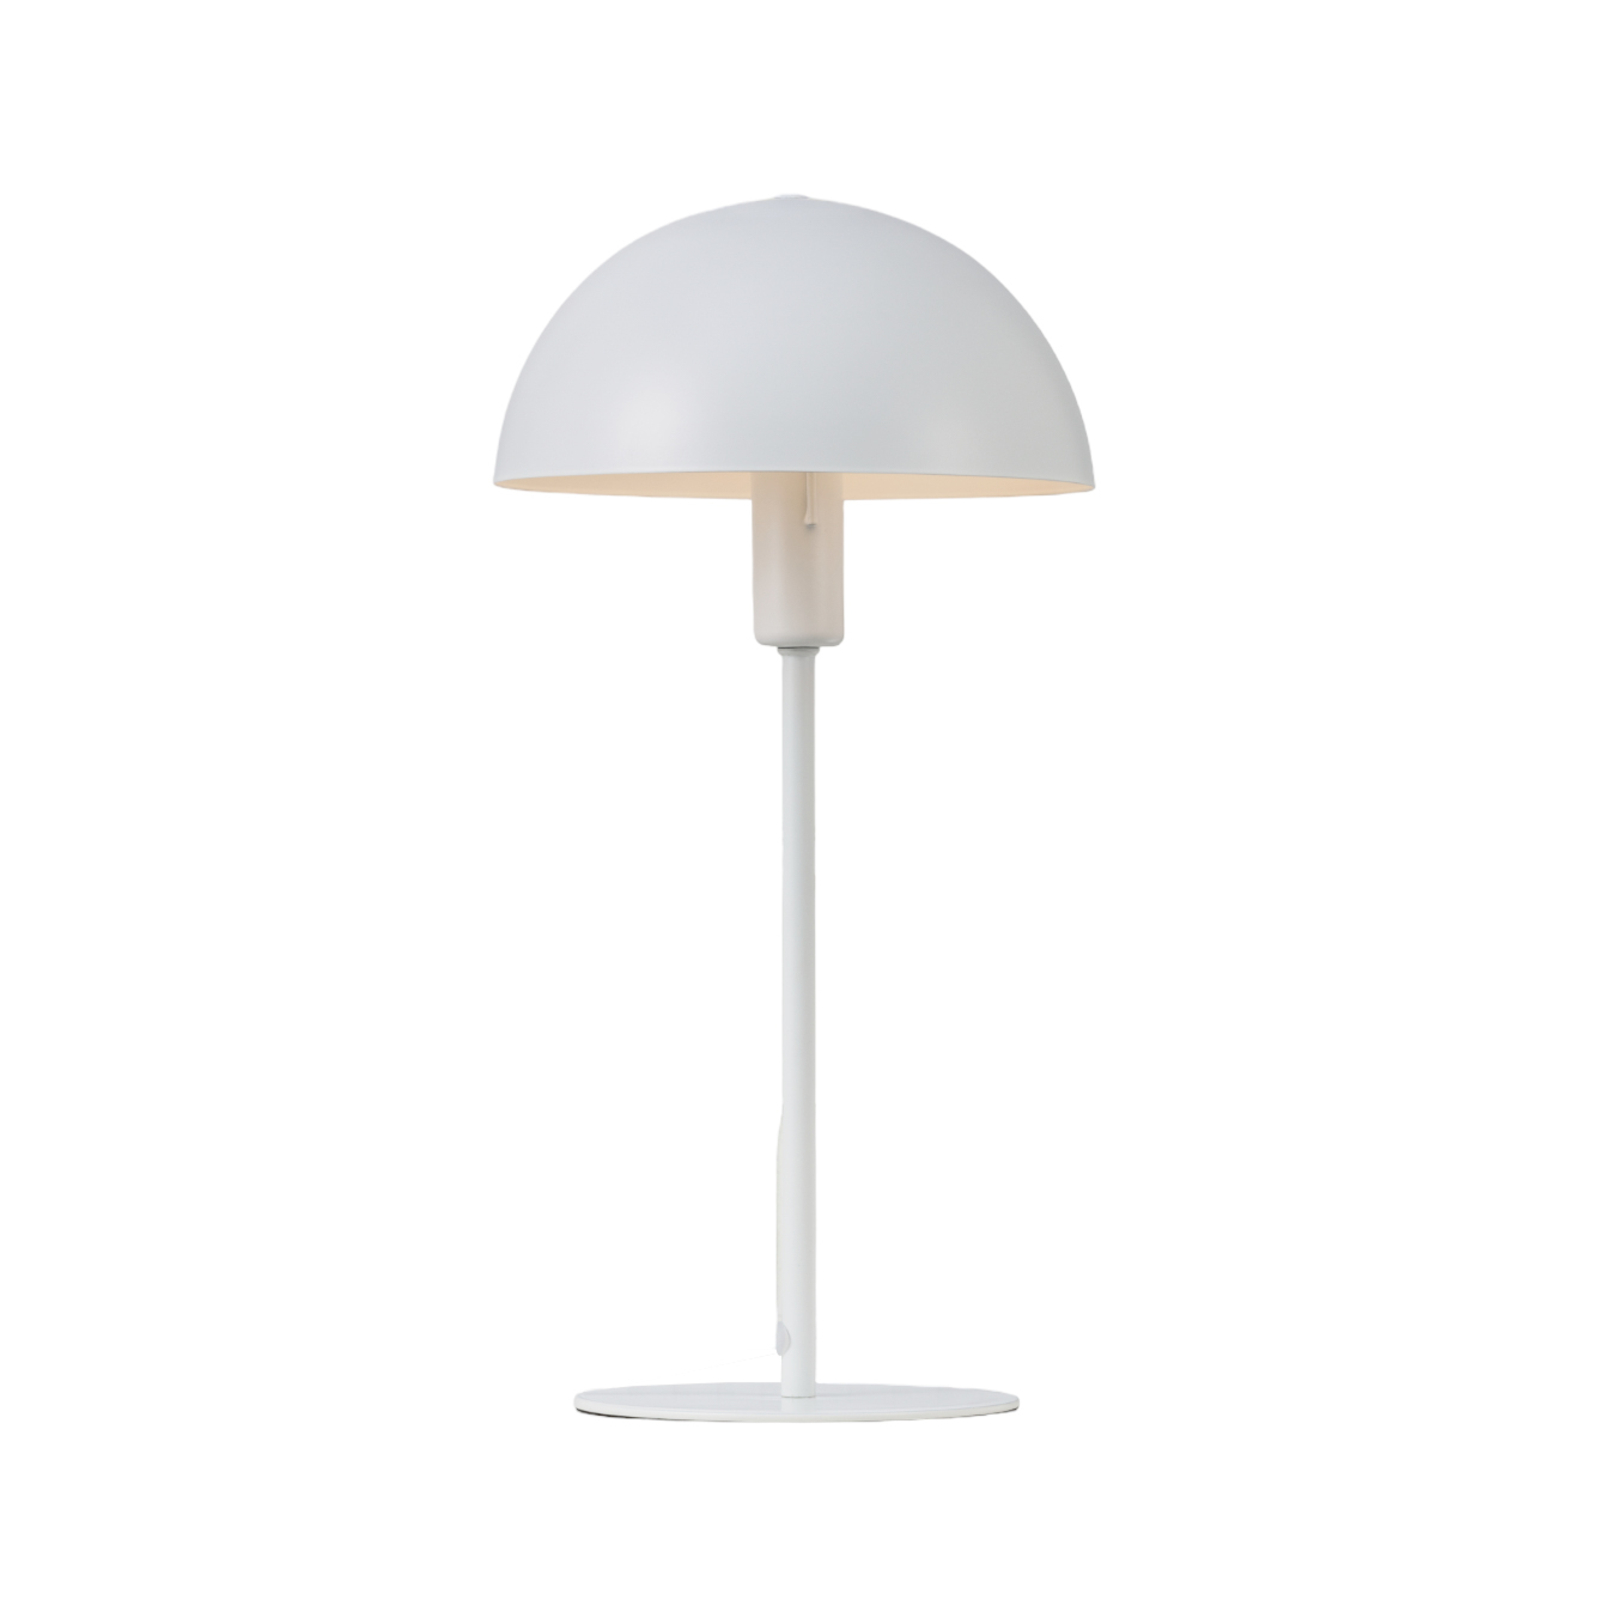 Ellen 20 table lamp made of metal, white